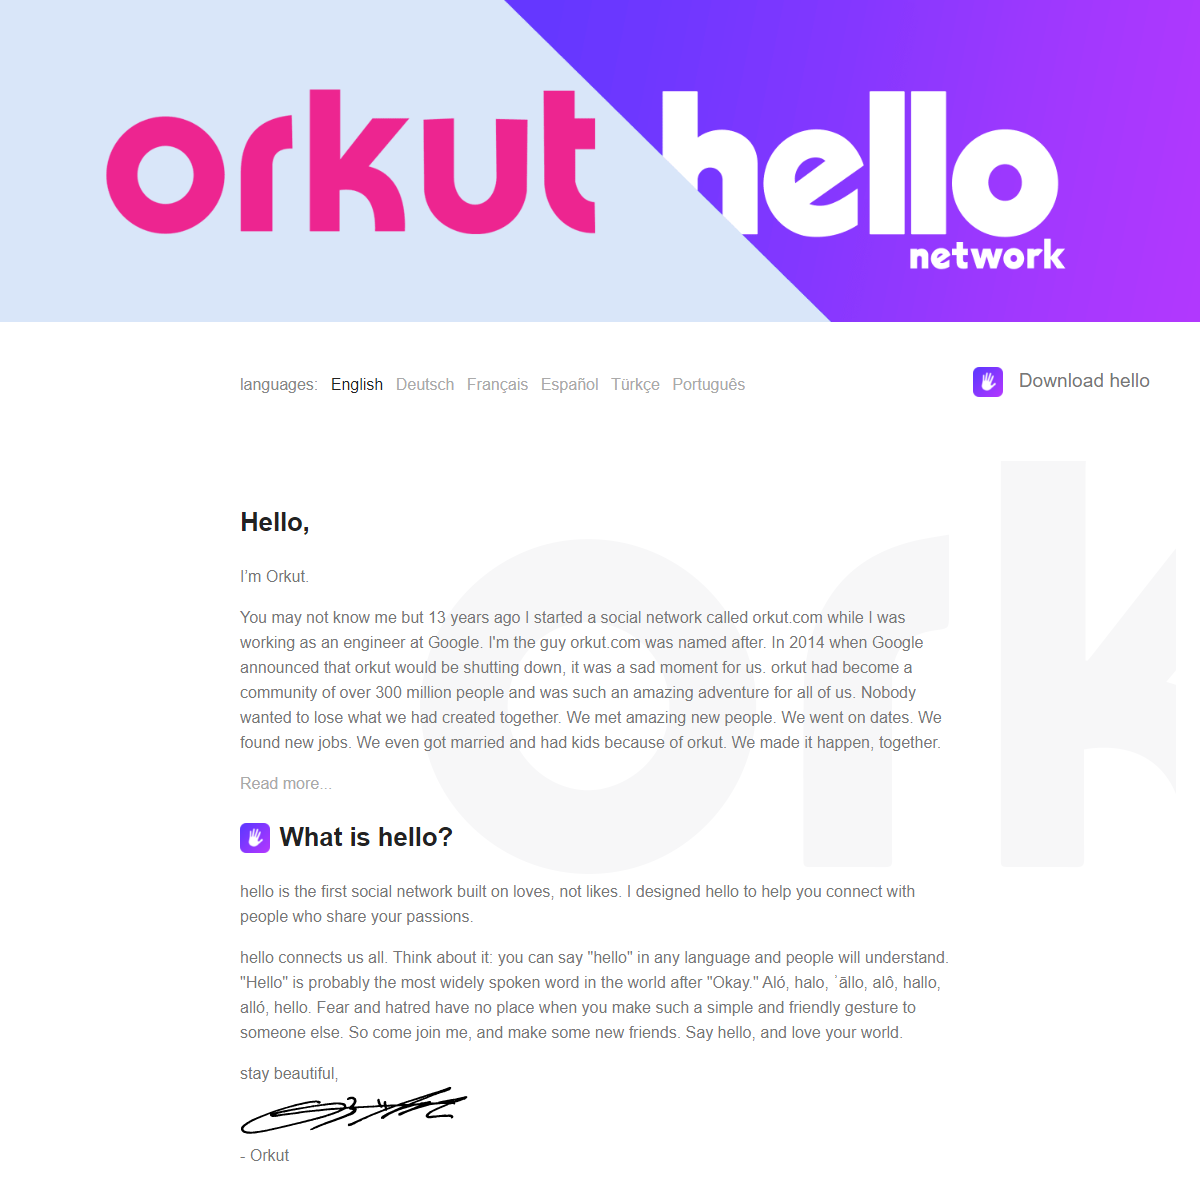 A complete backup of http://www.orkut.com/index.html